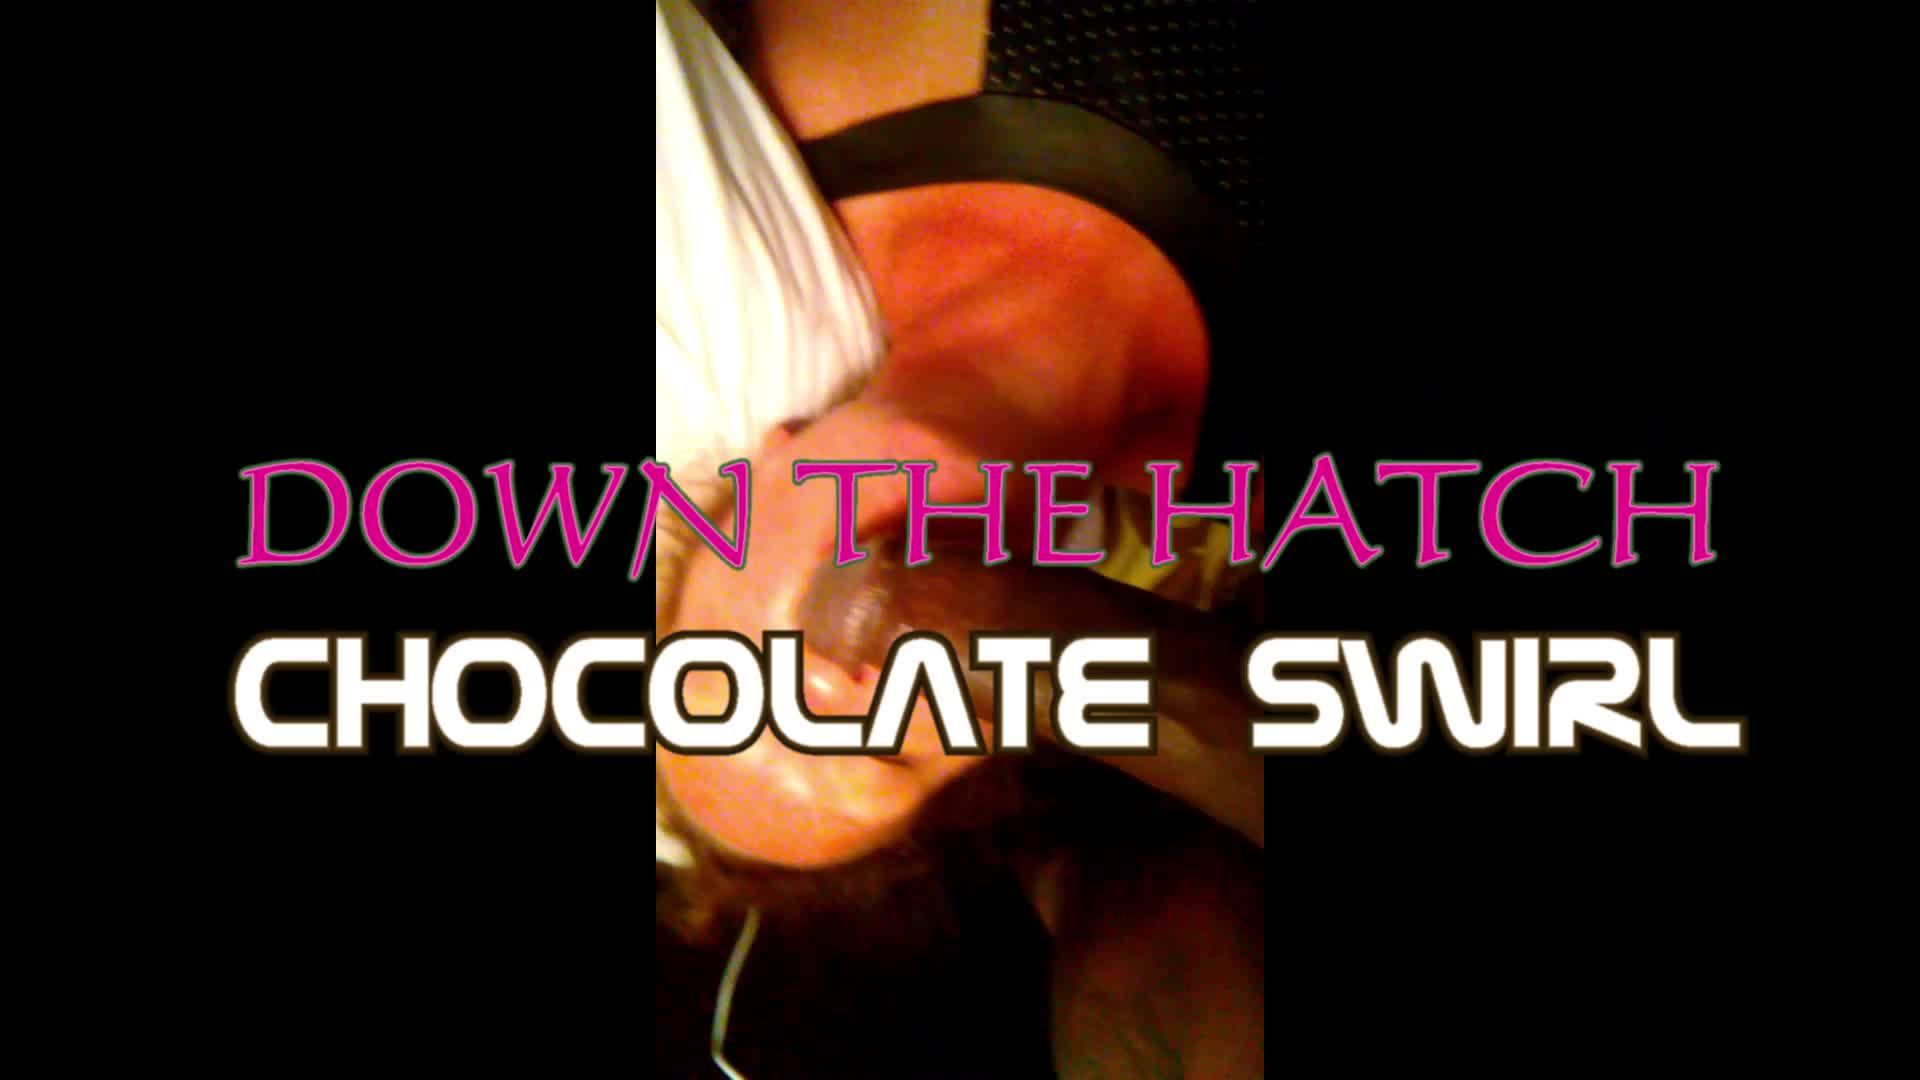 DOWN THE HATCH FT. CHOCOLATE SWIRL